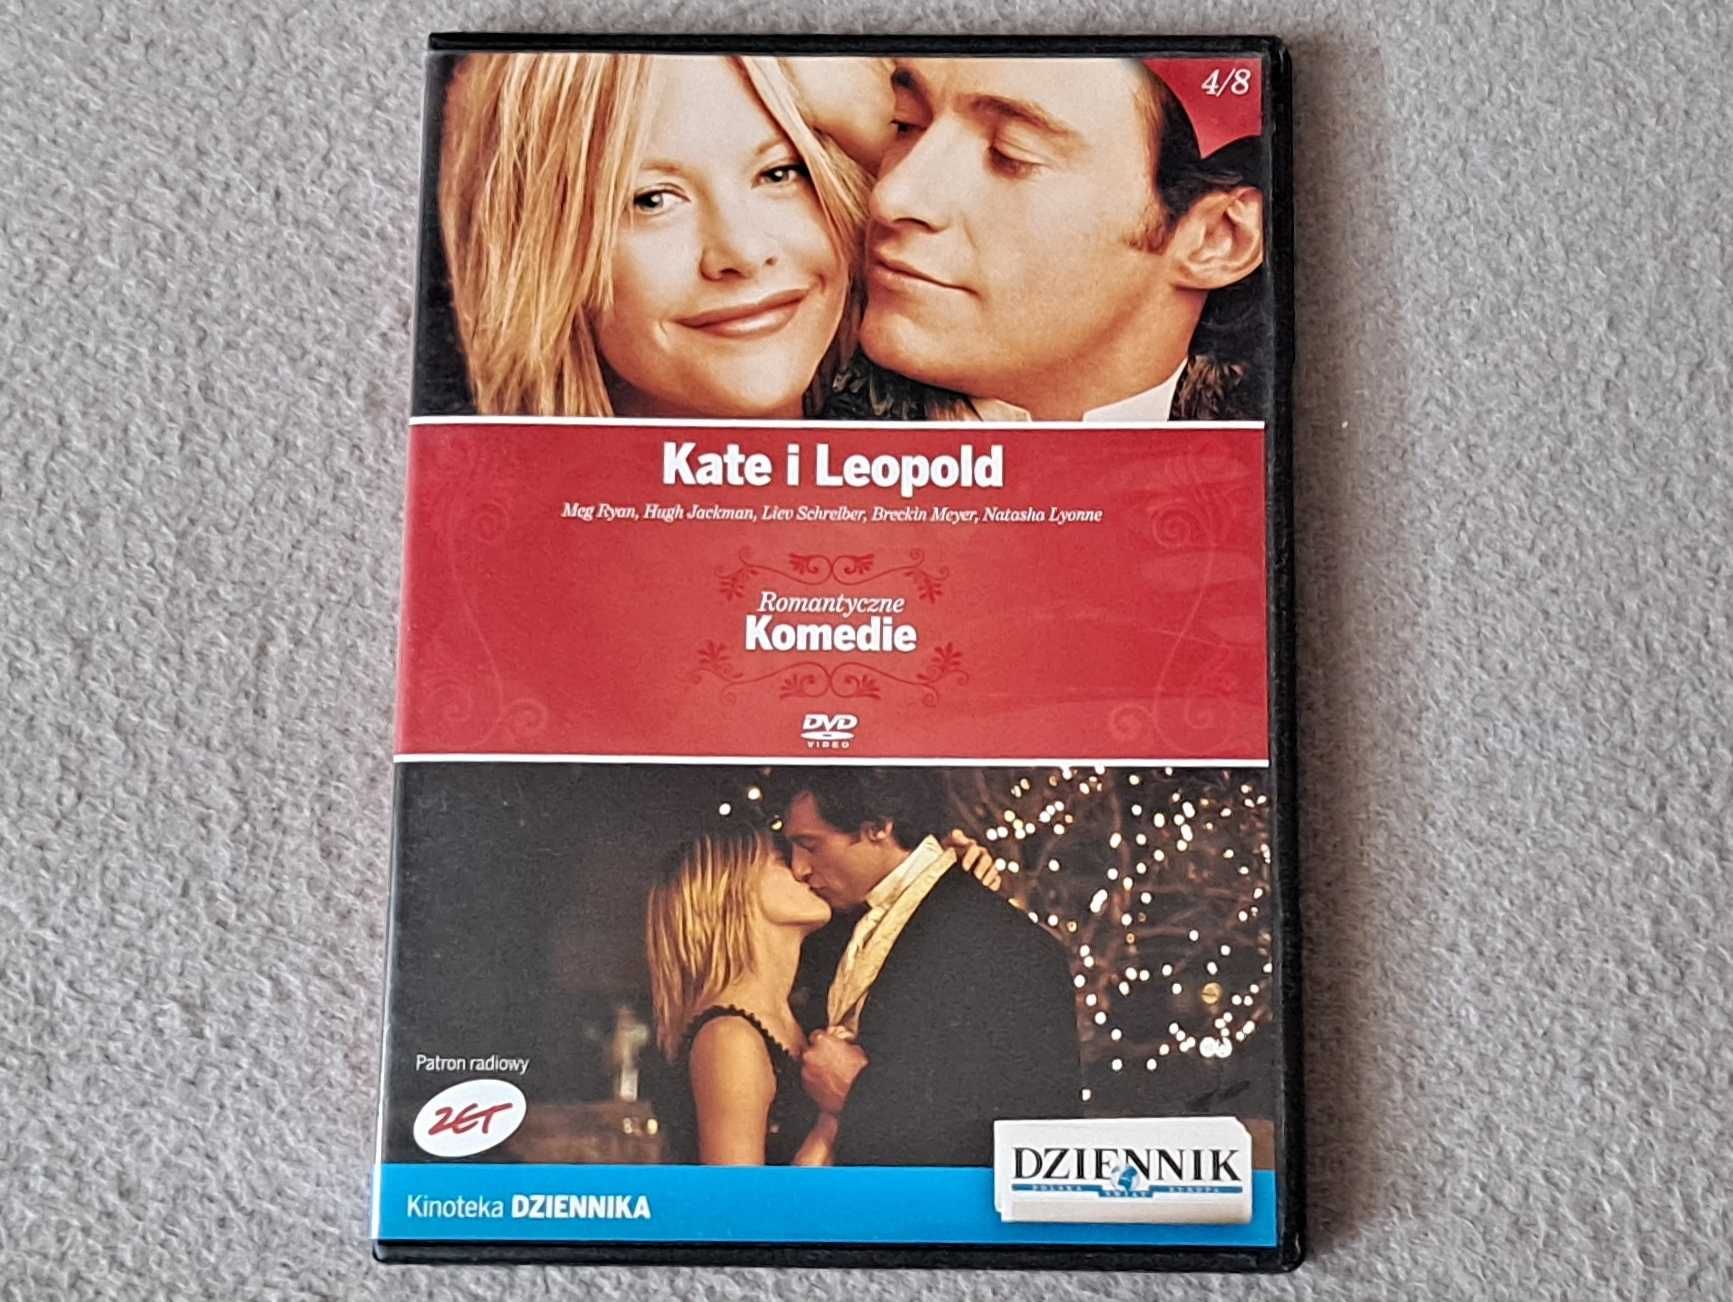 Film na DVD prod. USA pt. "KATE I LEOPOLD" z Meg Ryan i Hugh Jackman